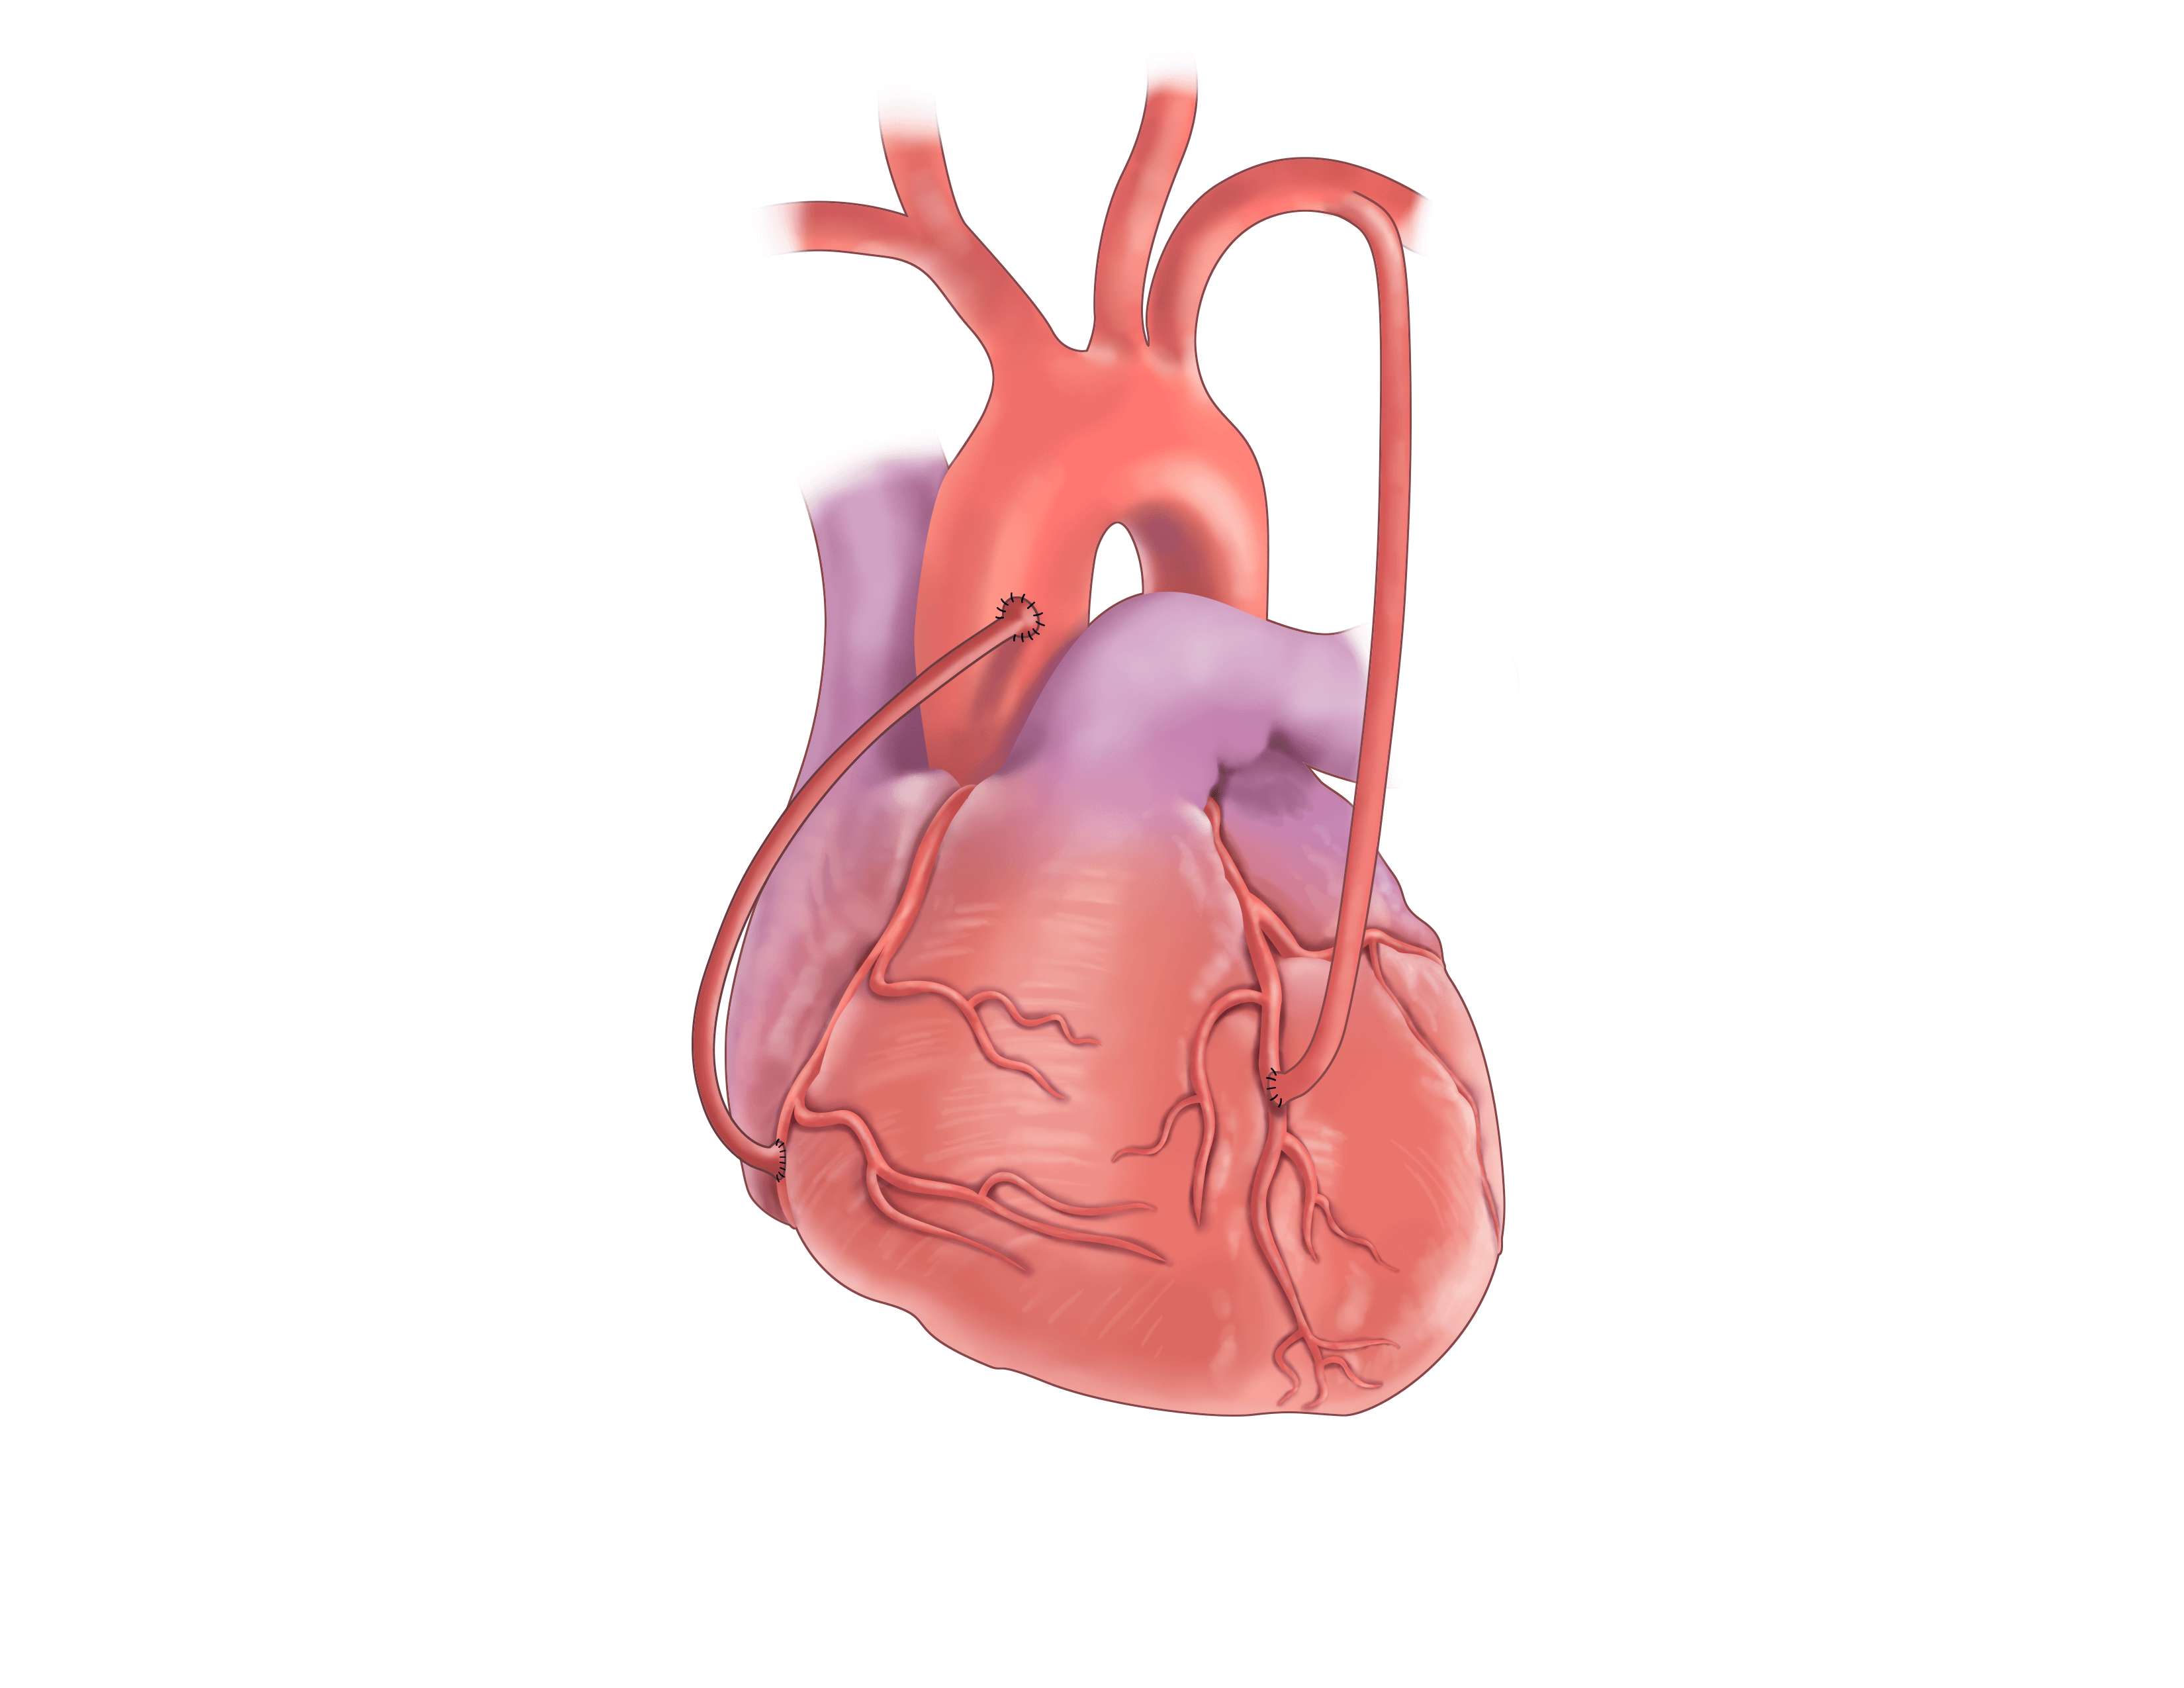 coronary artery bypass graft